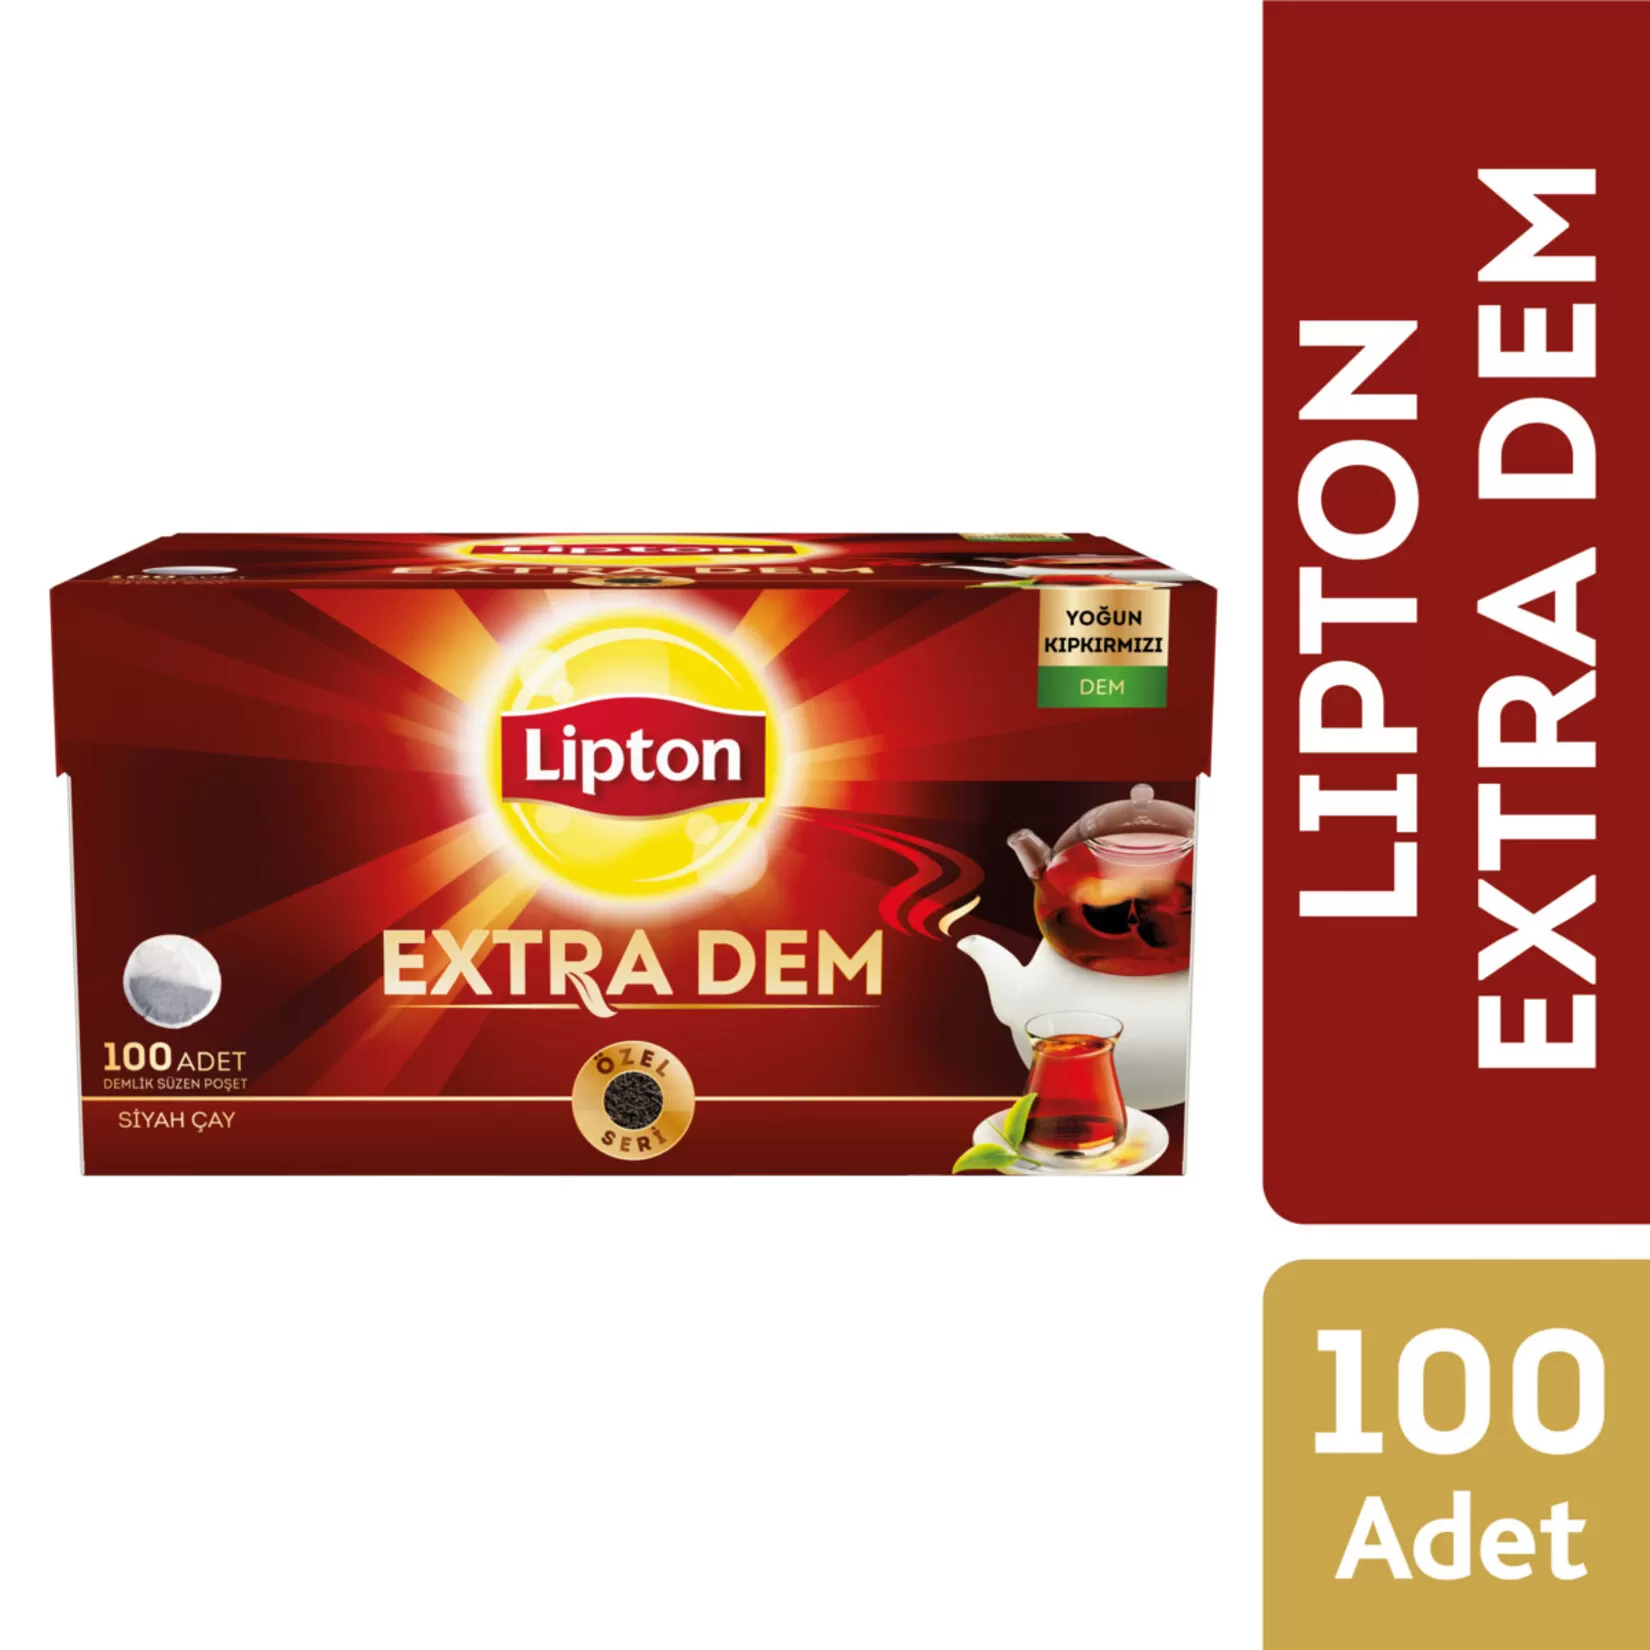 Lipton Extra Dem Demlik Poşet Siyah Çay 100'lü 6 Paket